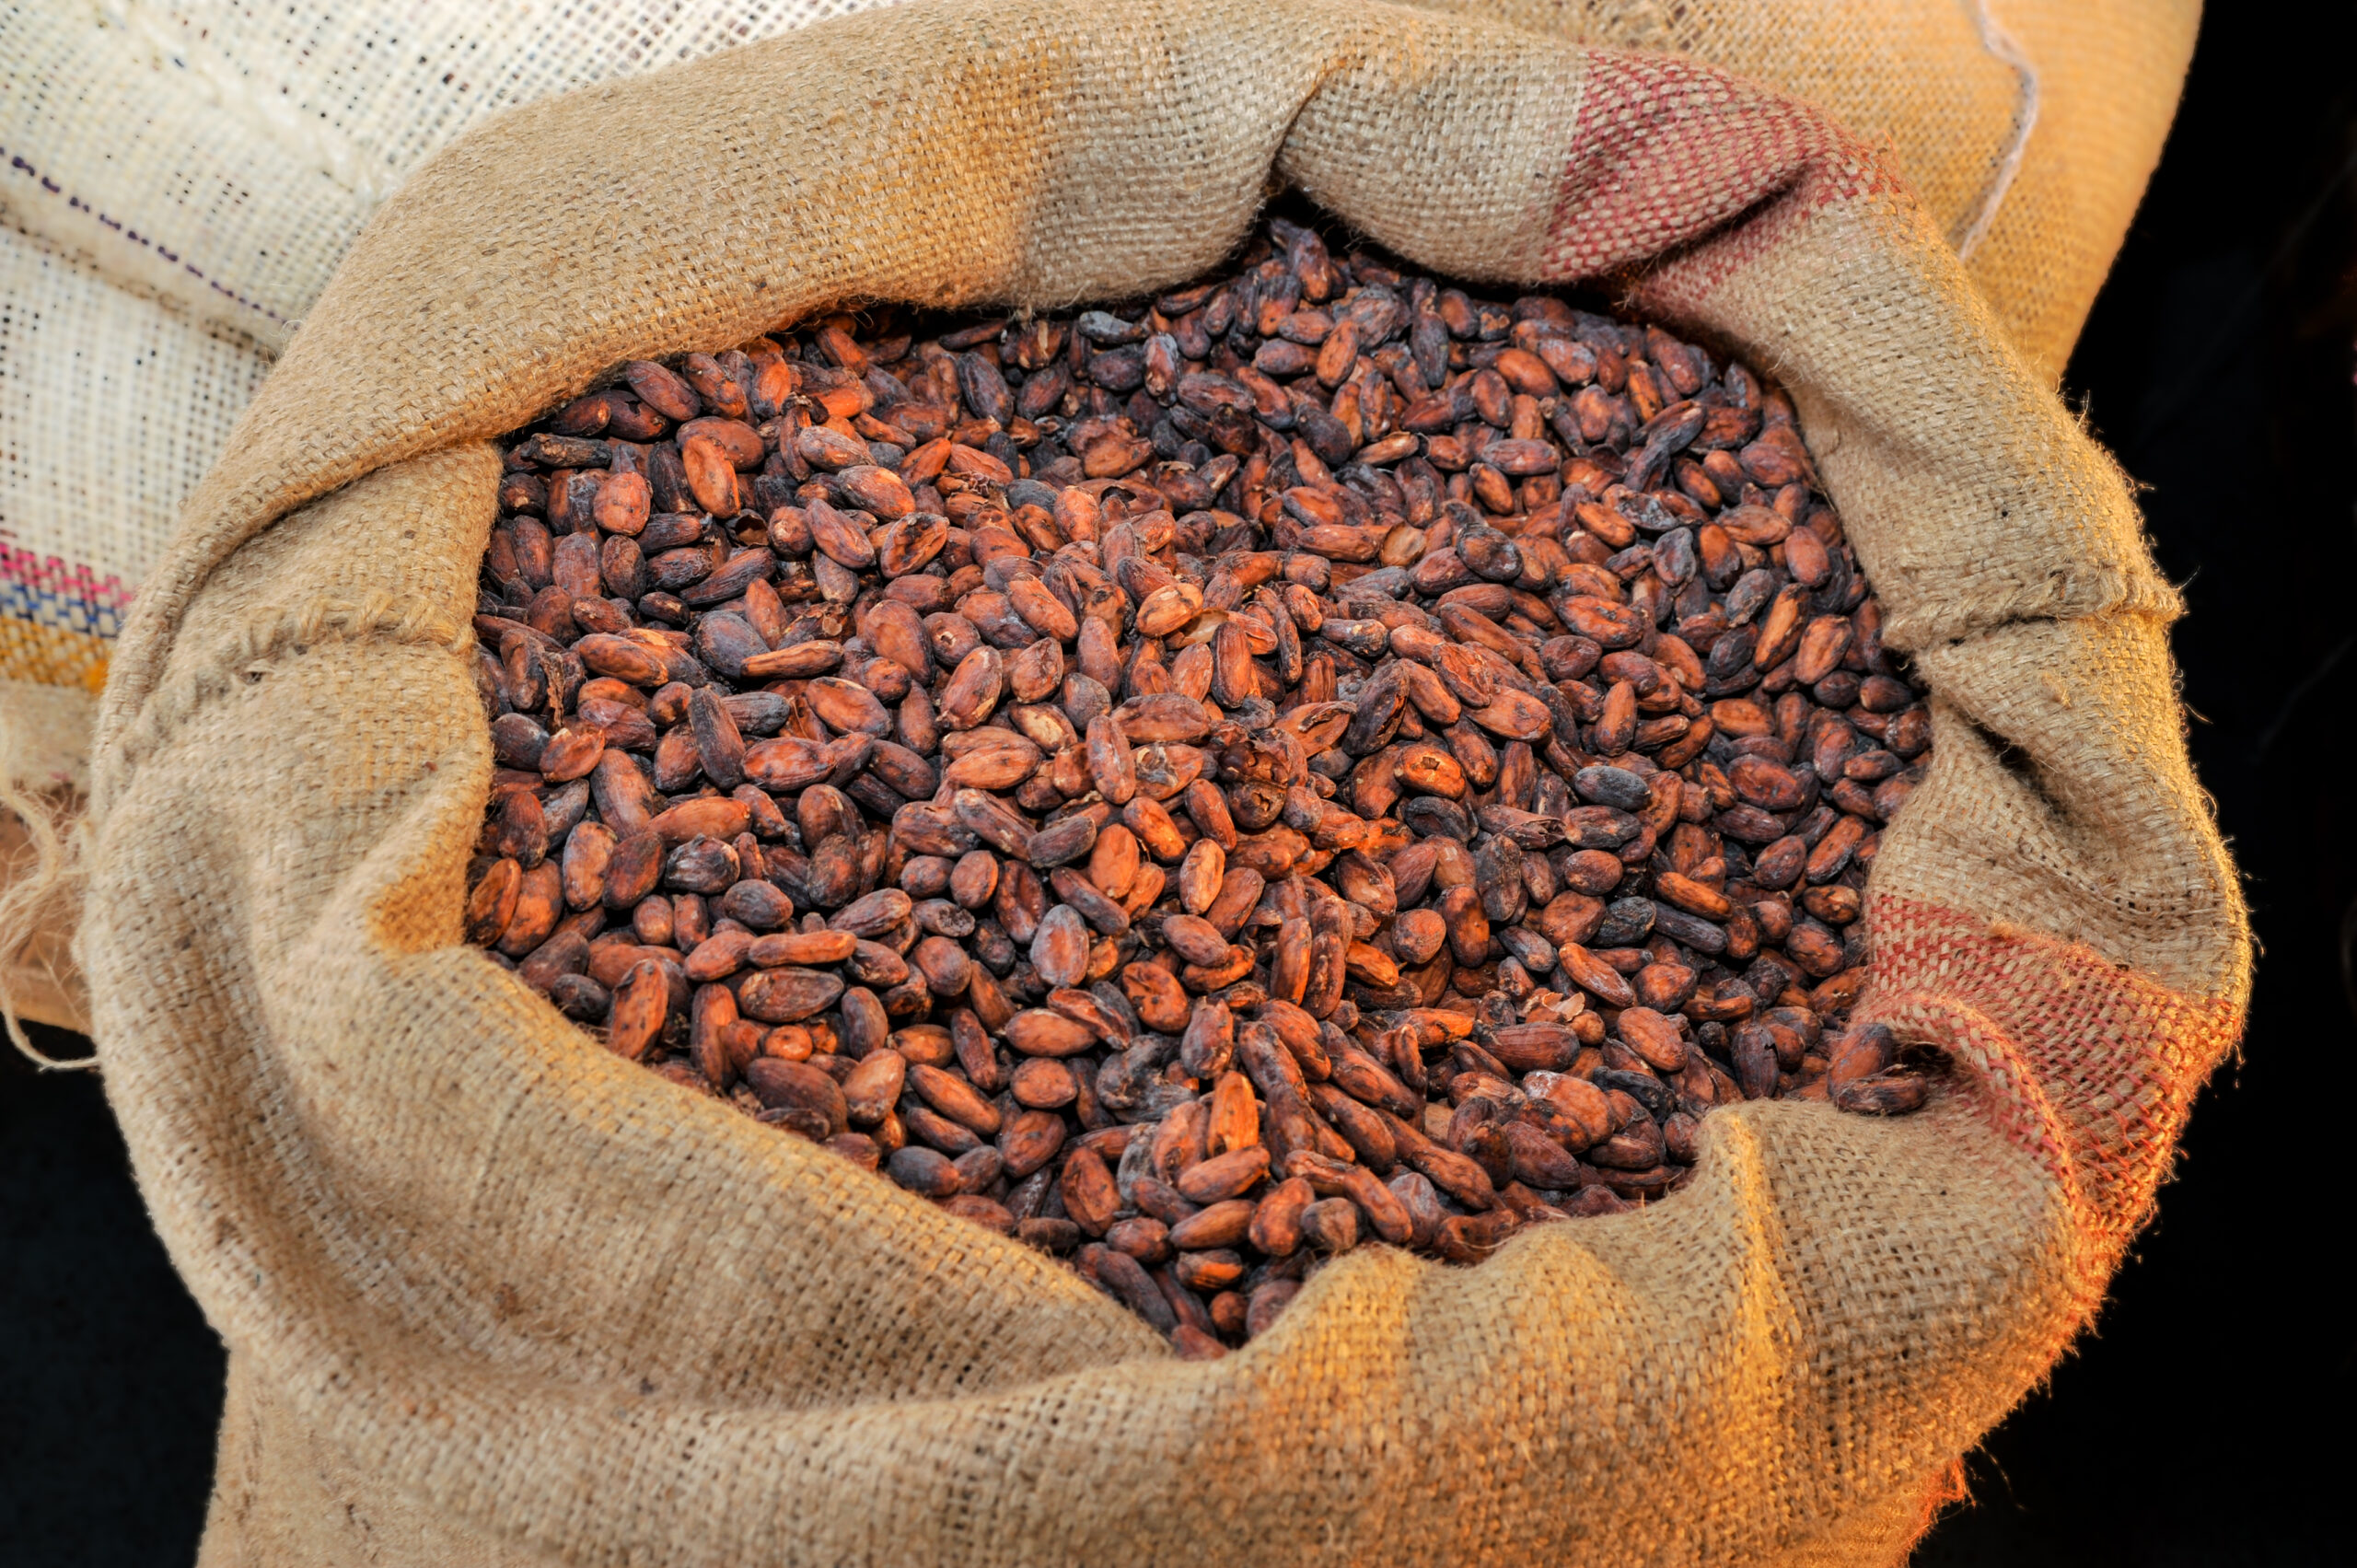 A hesian Sack full of Cocoa Beans